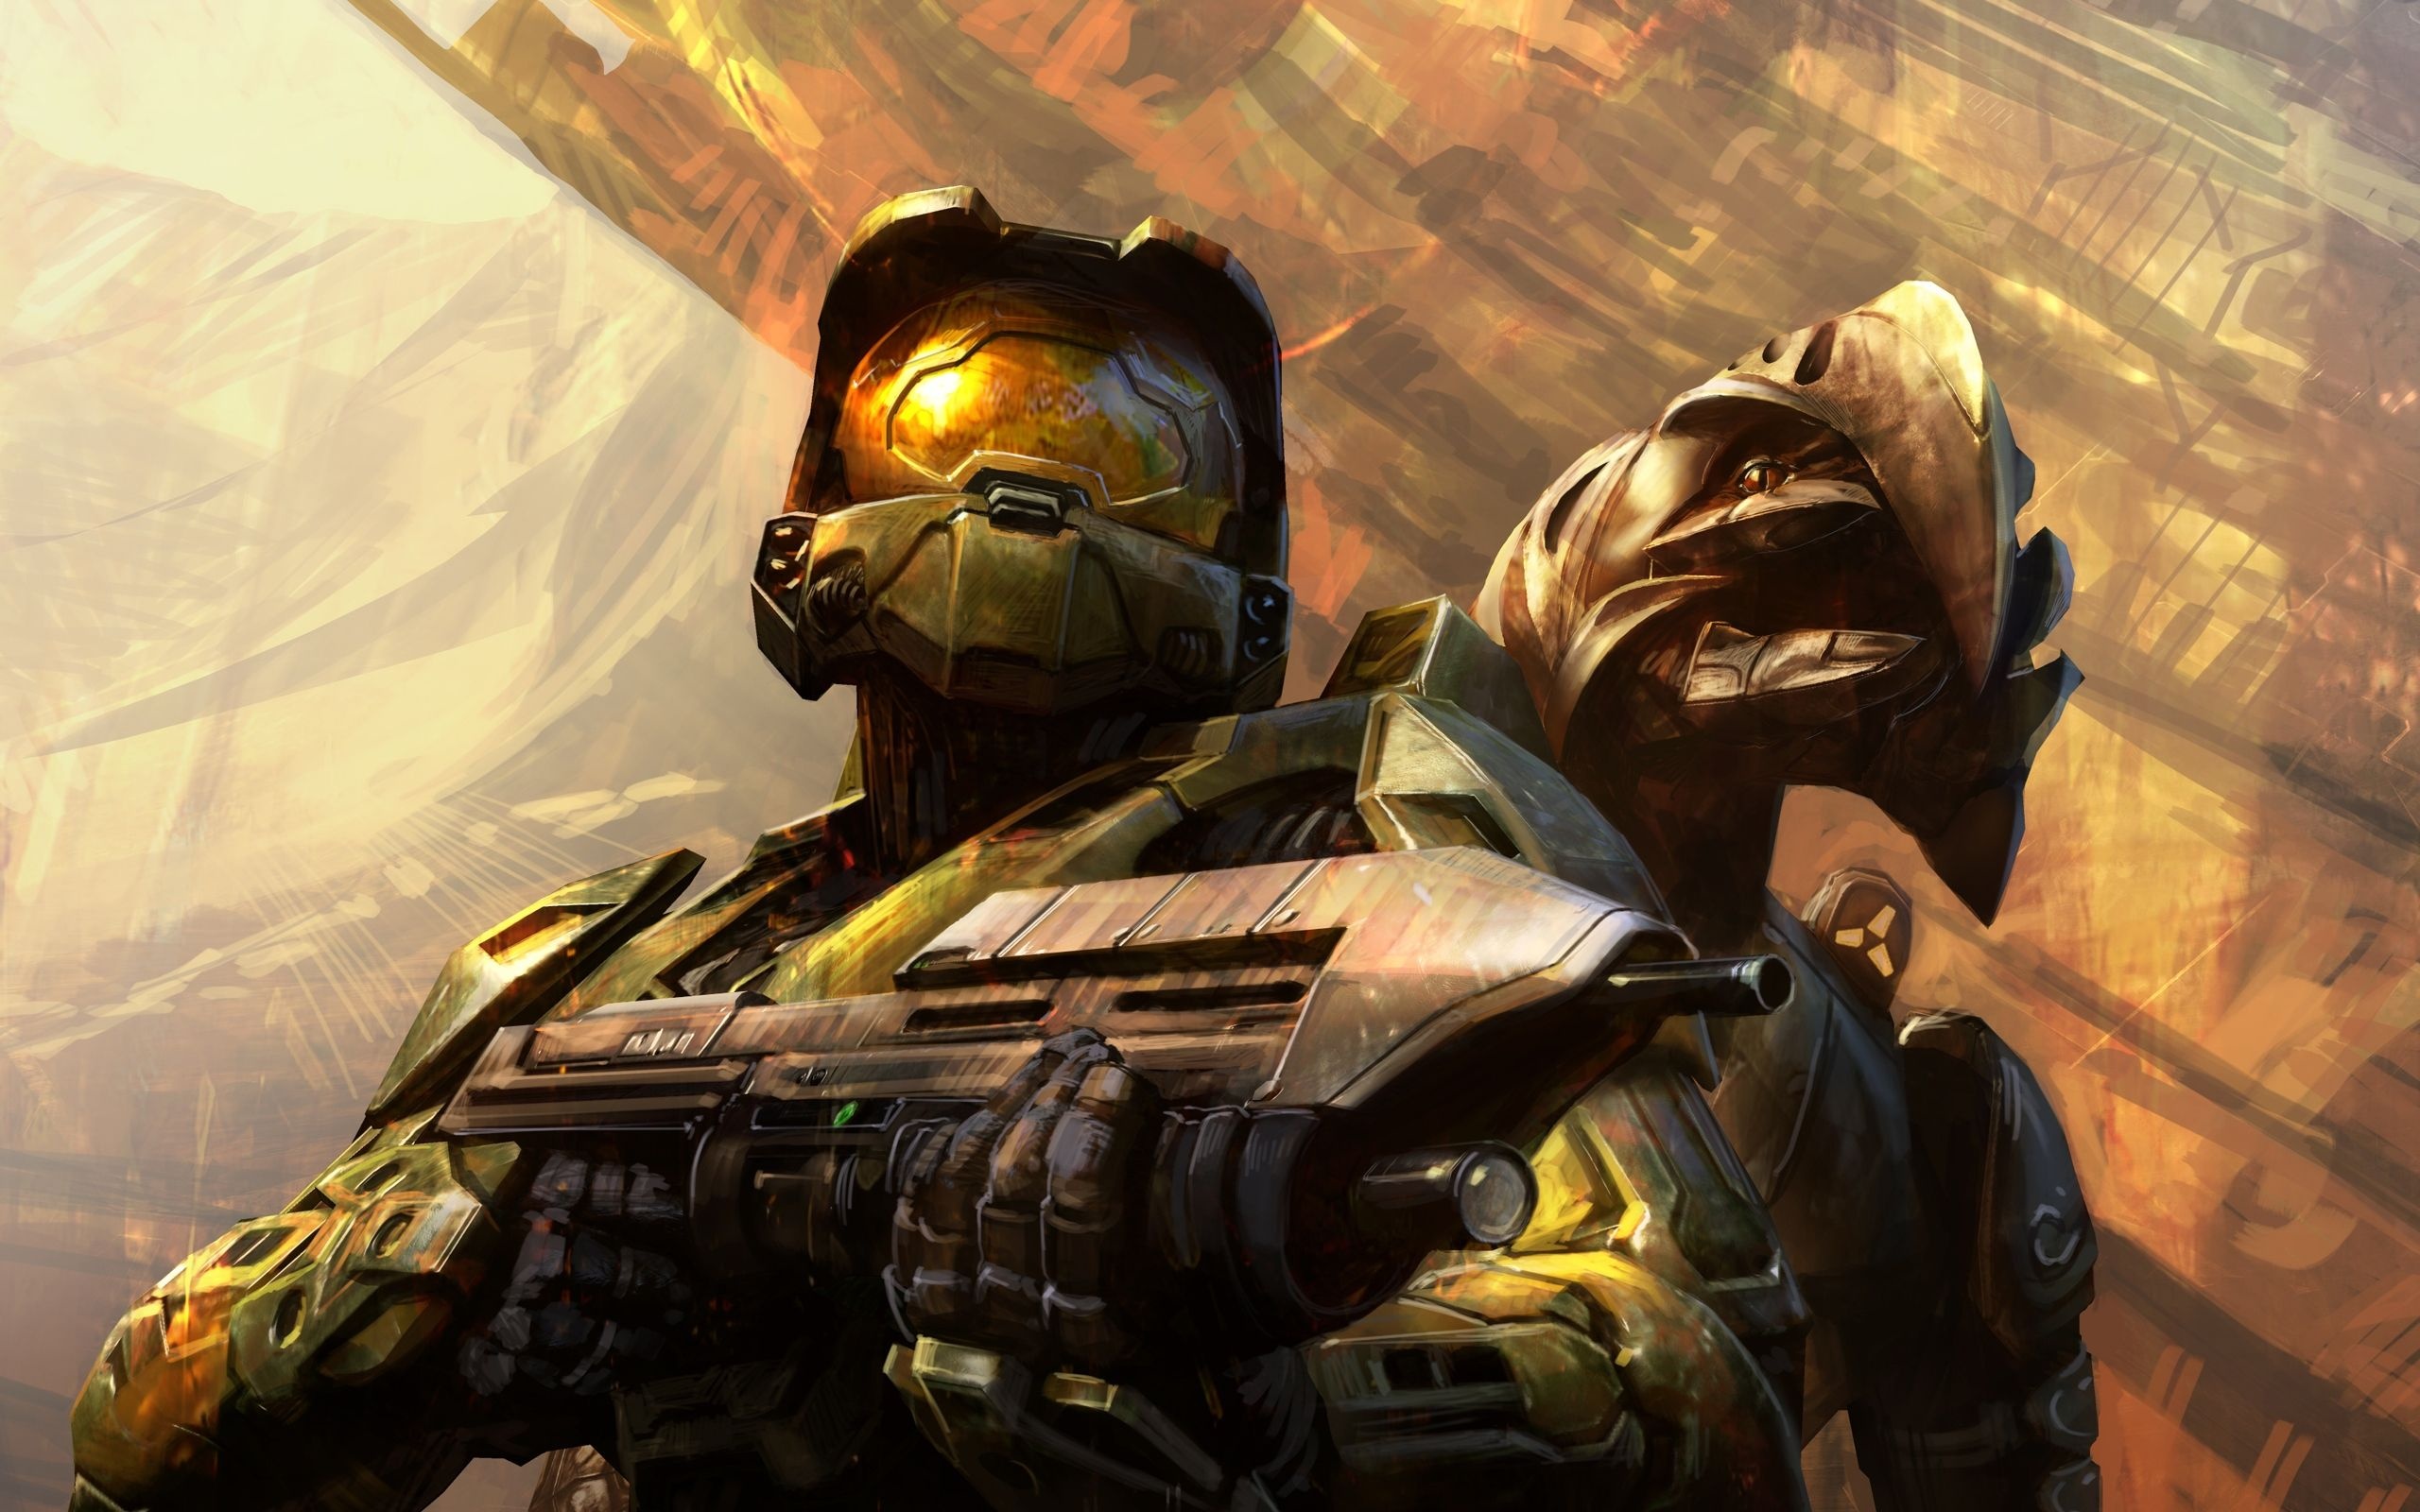 Arbiter (Halo), Halo 3 wallpapers, Icons of gaming, Epic artwork, 2560x1600 HD Desktop